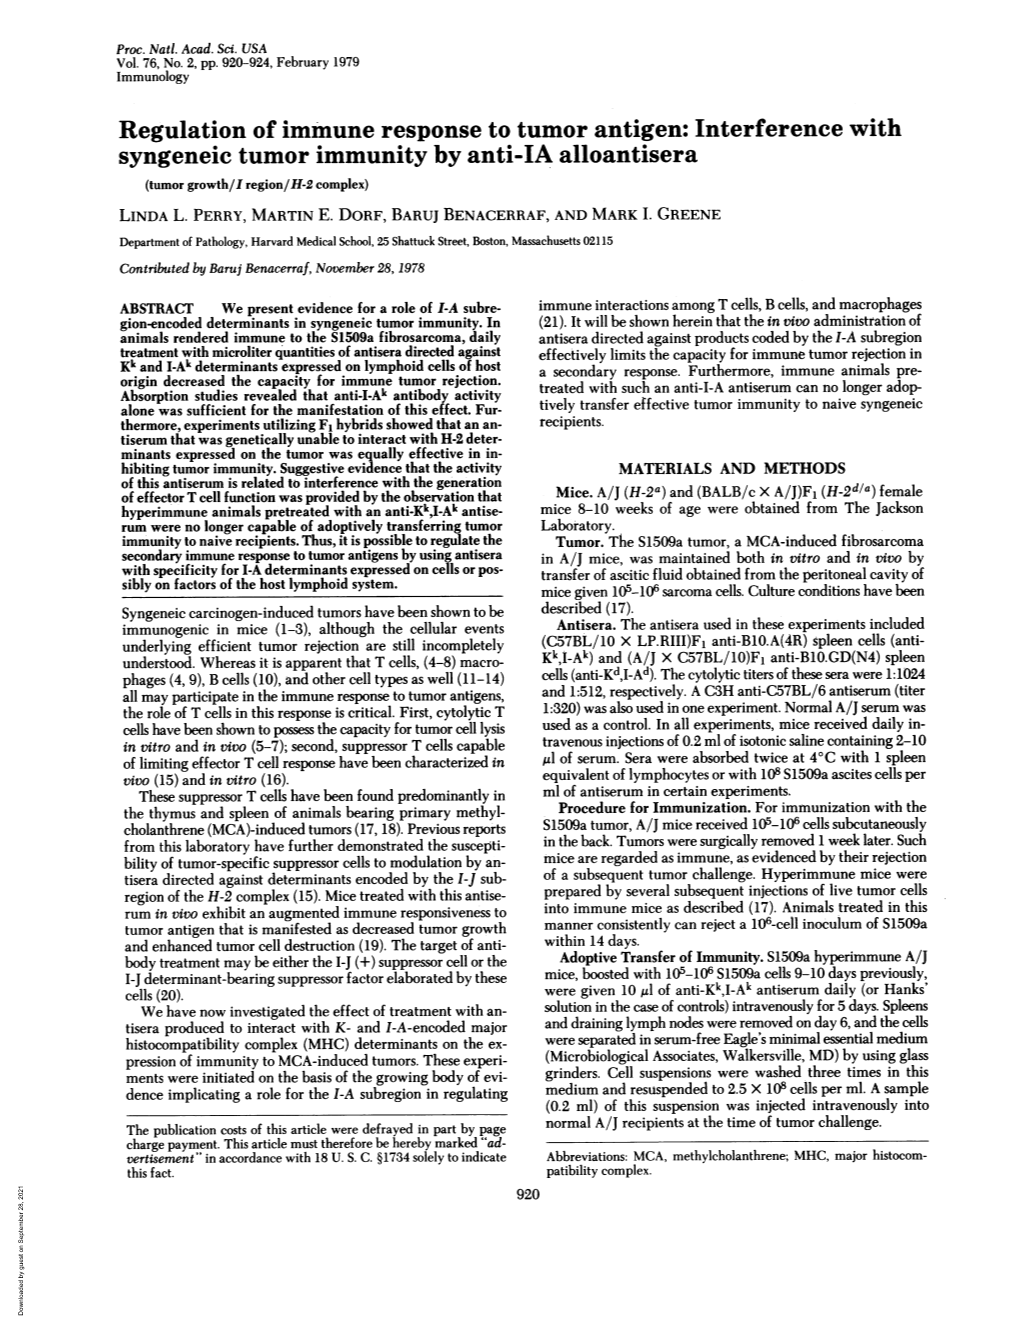 Regulation of Immune Response to Tumor Antigen: Interference with Syngeneic Tumor Immunity by Anti-IA Alloantisera (Tumor Growth/I Region/H-2 Complex) LINDA L